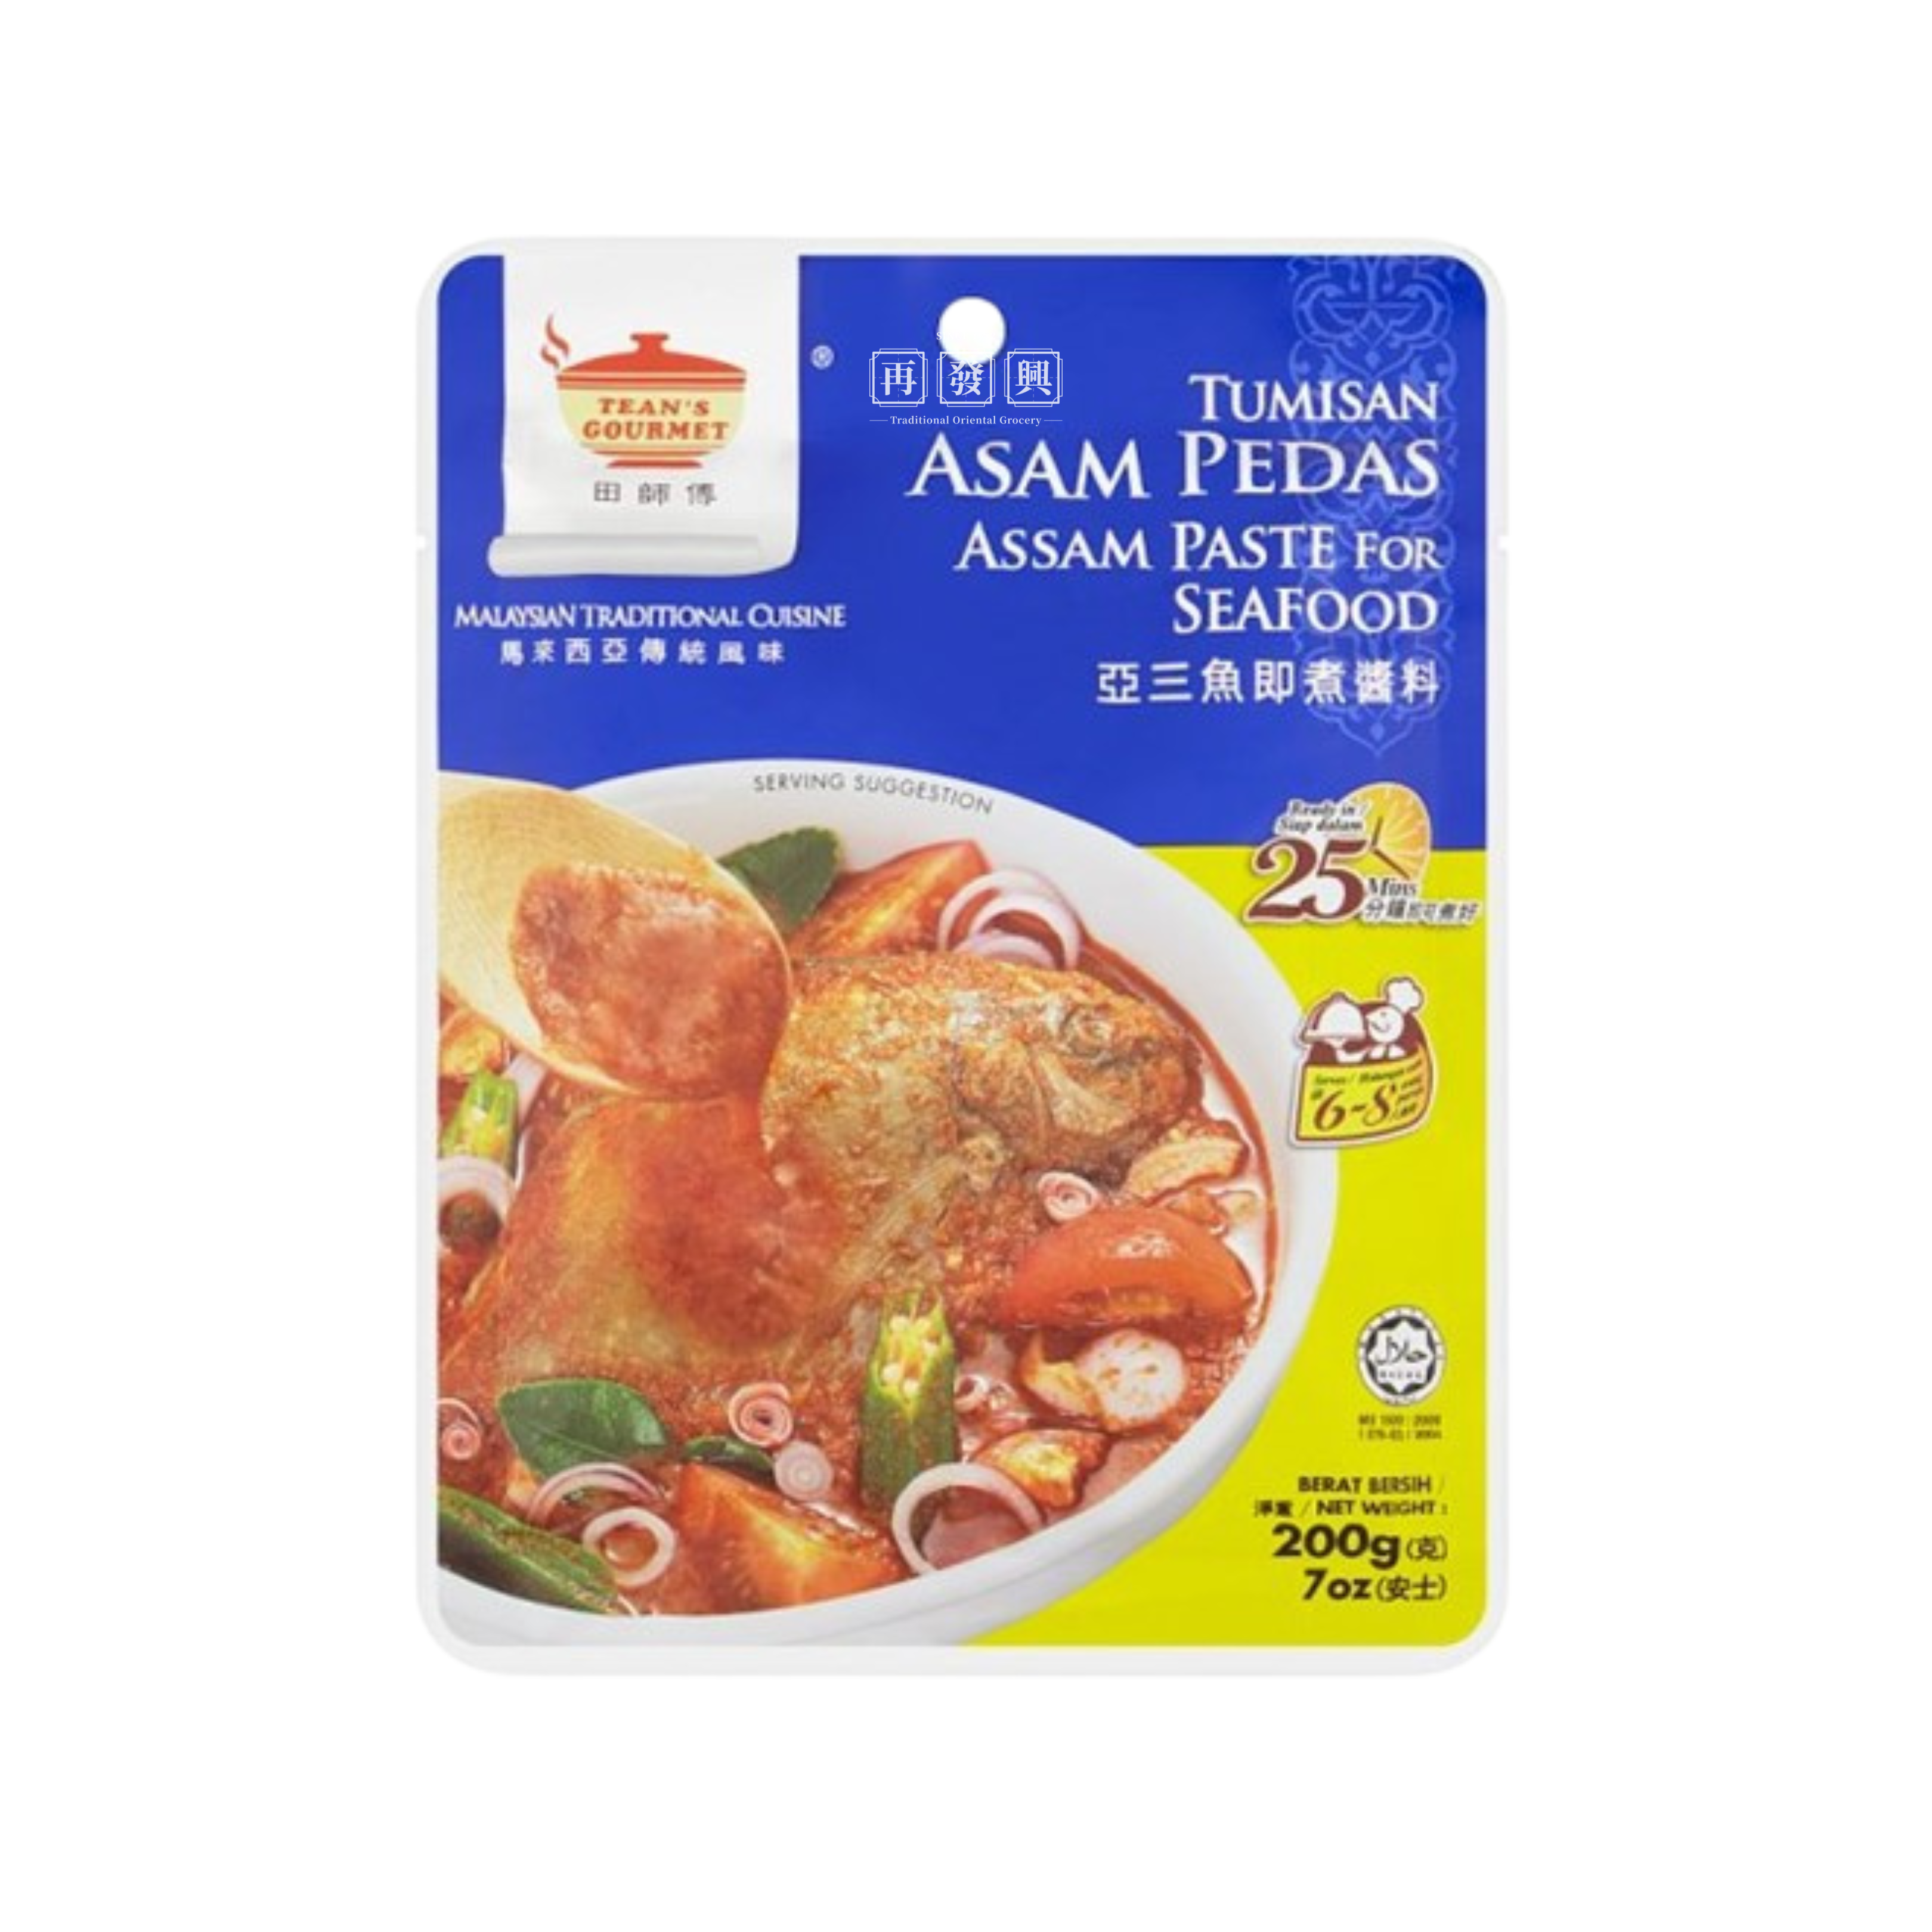 Tean's Assam Paste for Seafood 200g